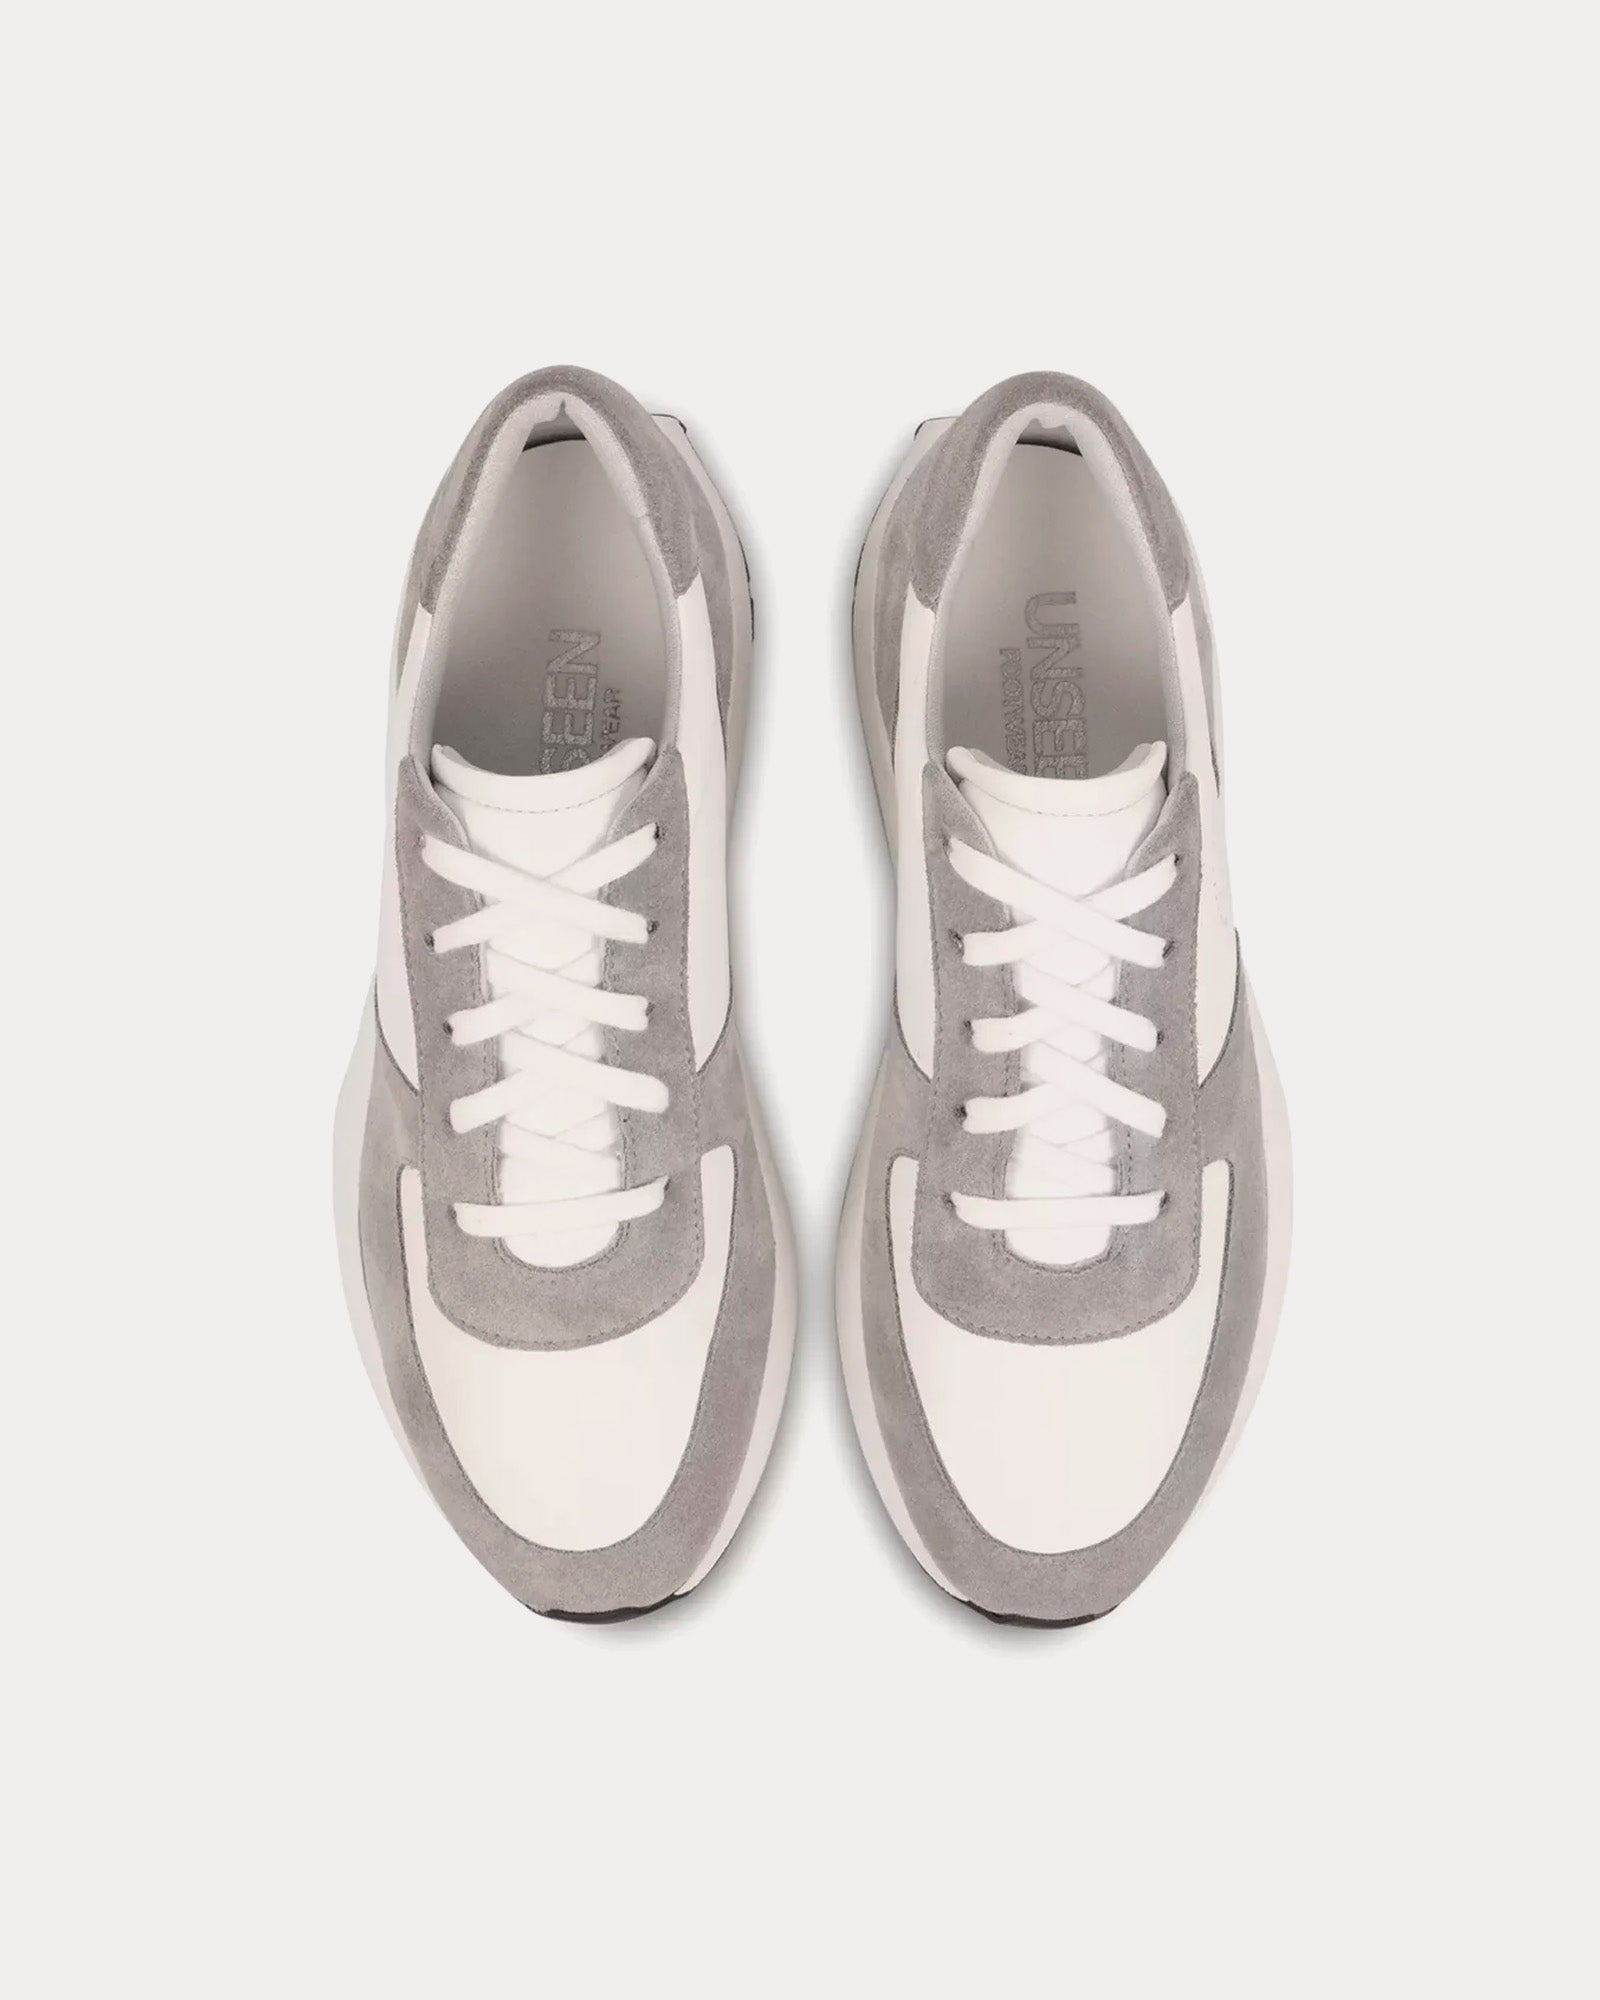 Unseen Footwear - Trinity Leather & Suede Grey / White Low Top Sneakers